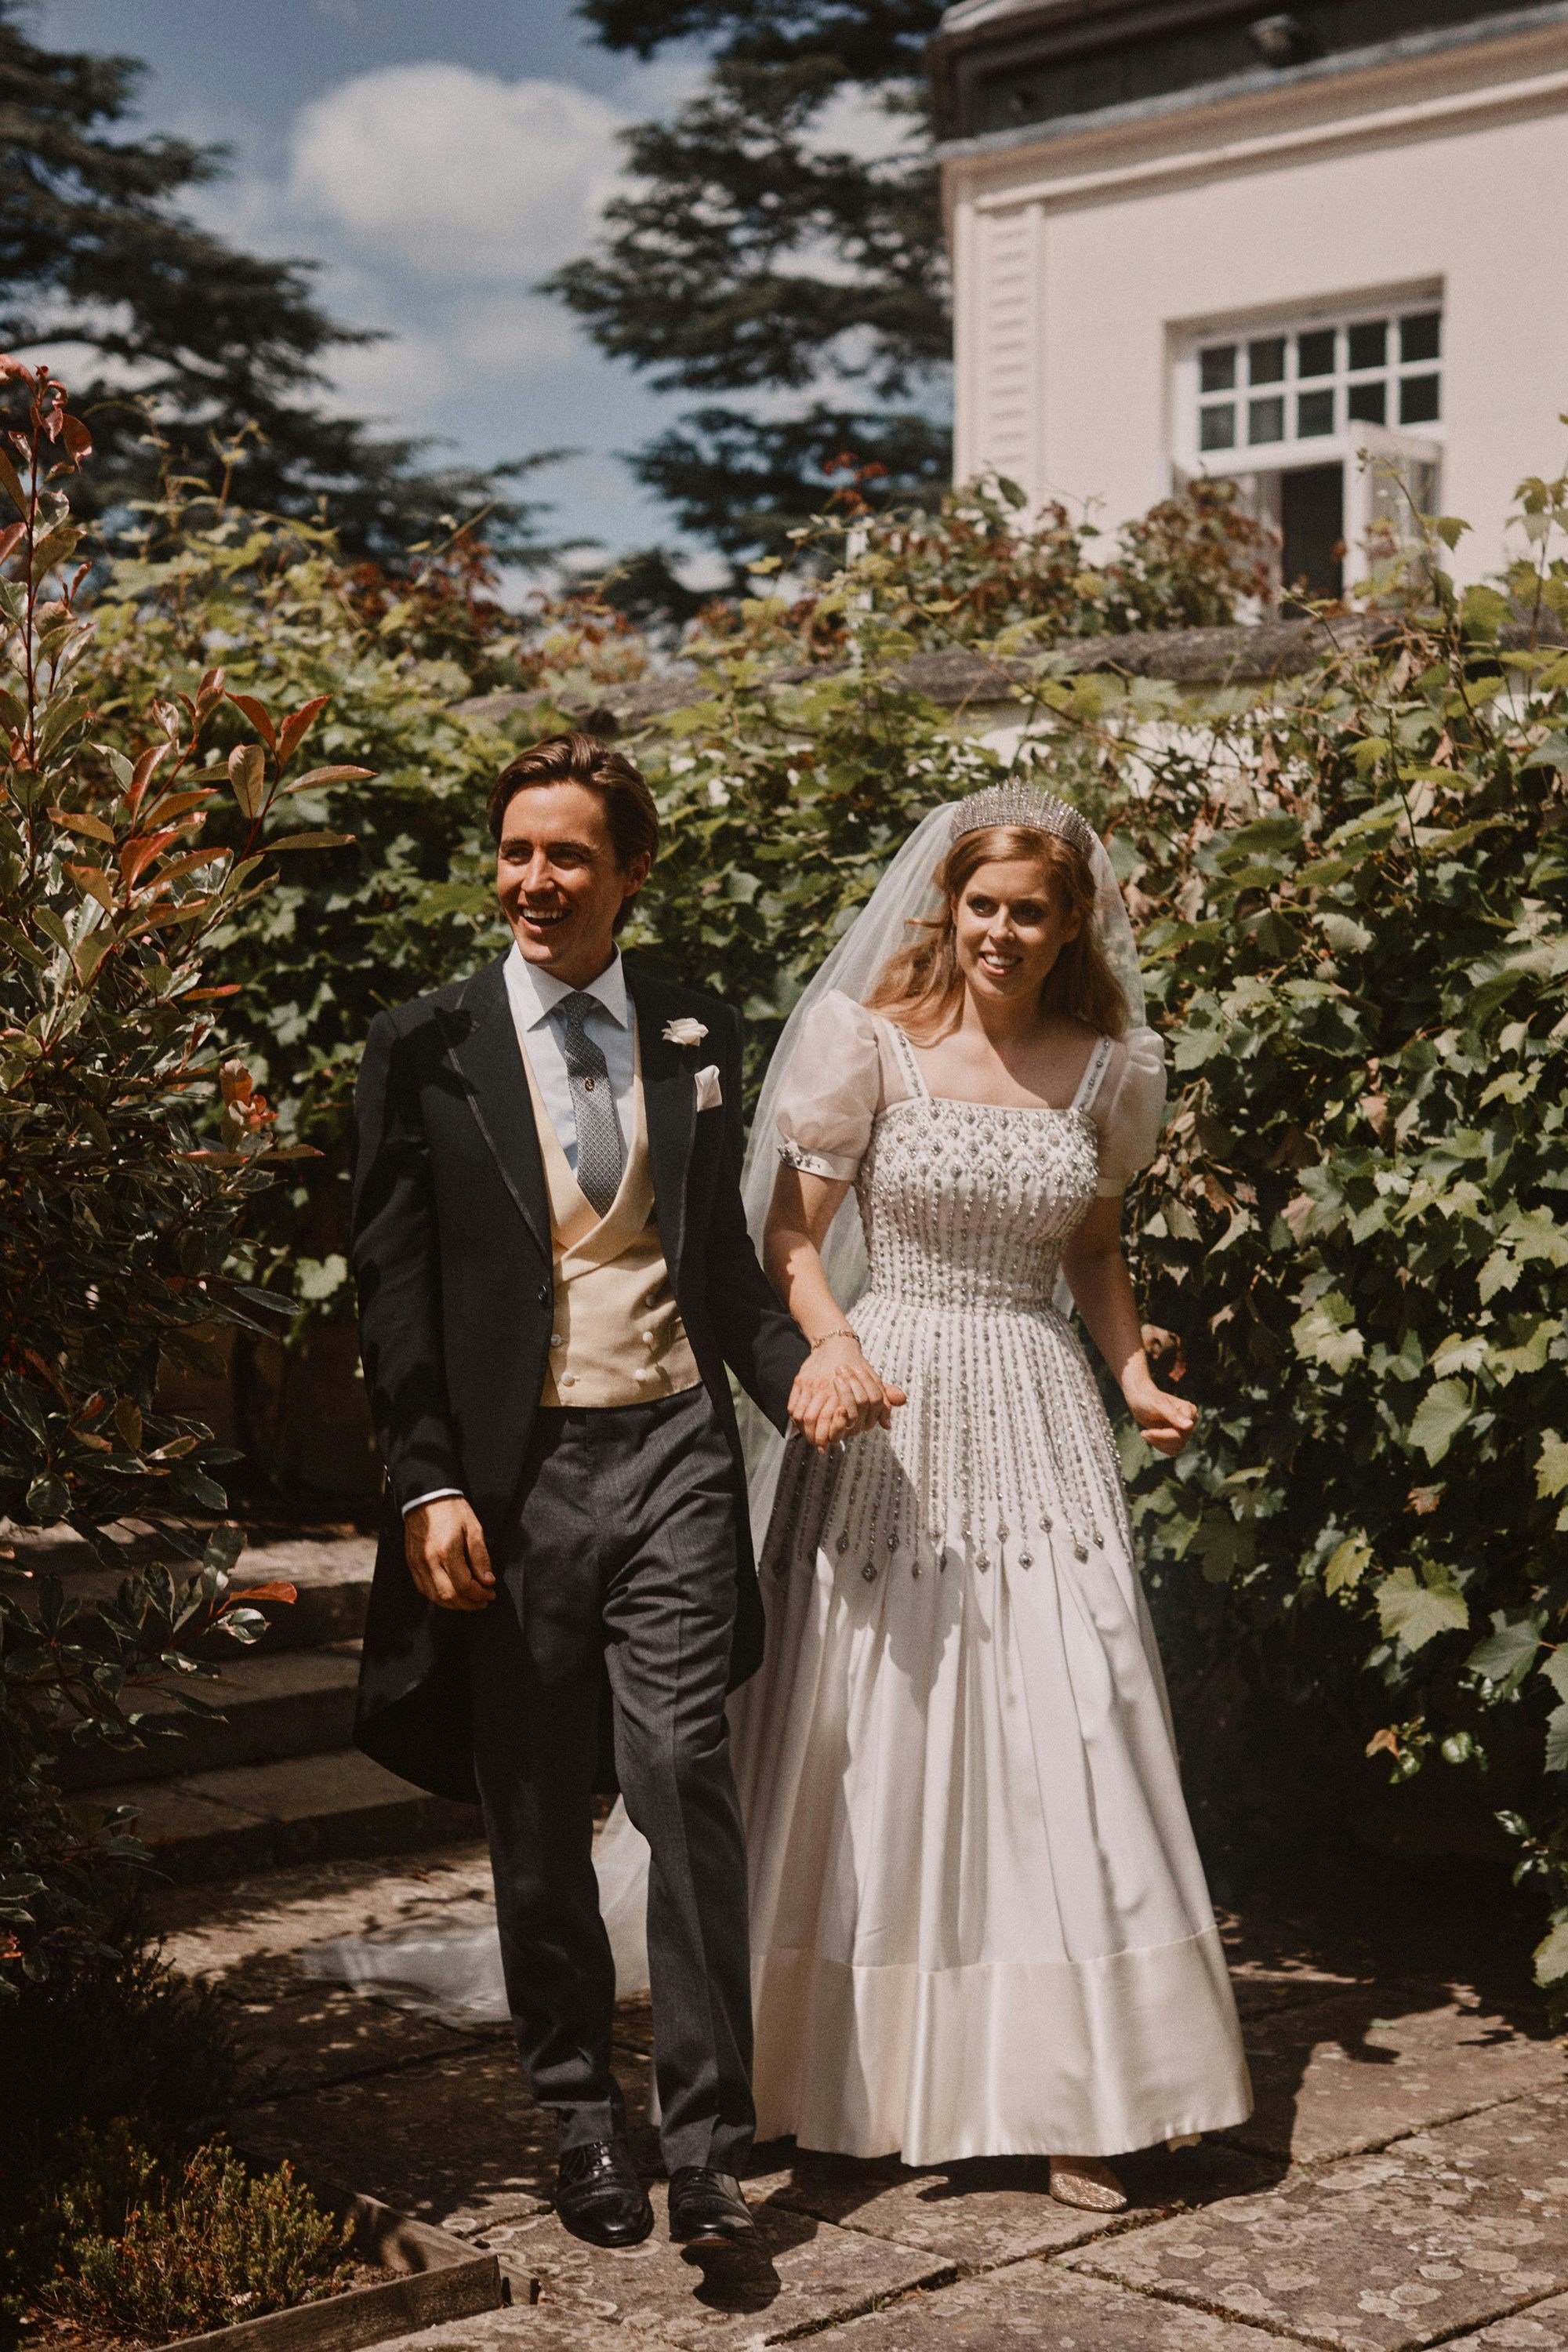 Princess Beatrice and Edoardo Mapelli Mozzi wedding day